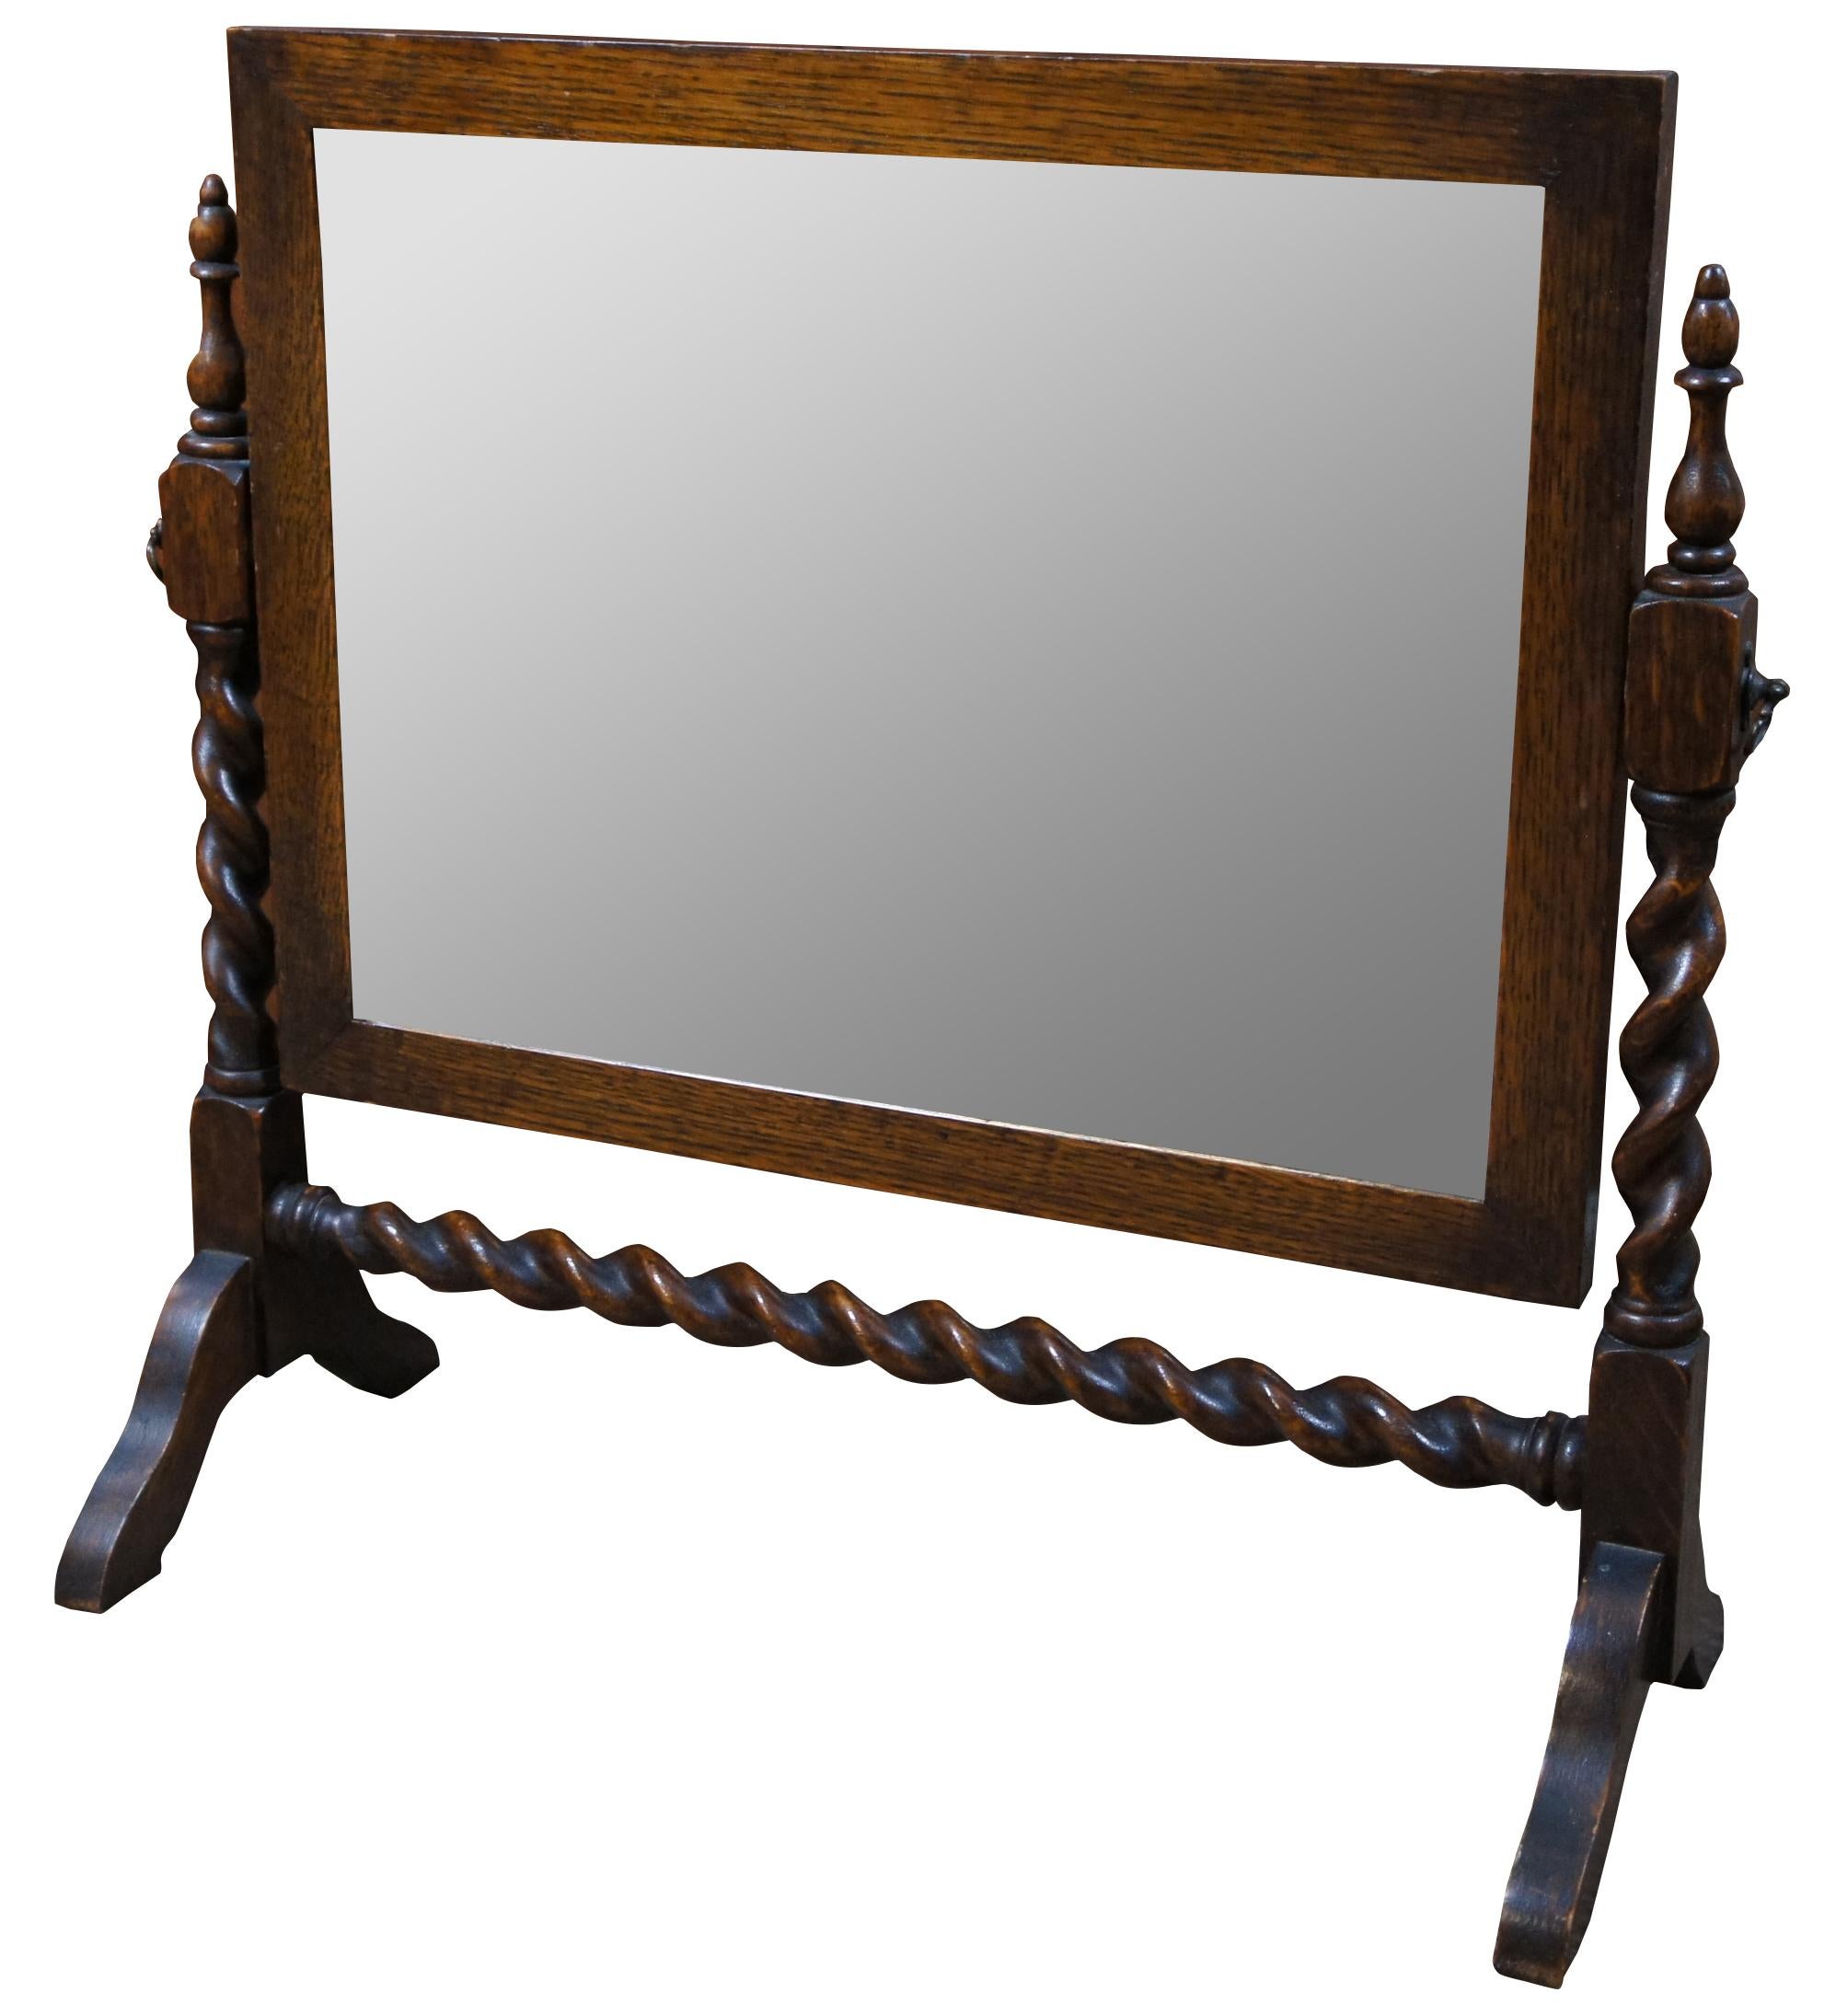 Antique Victorian oak dresser top Cheval shaving/ vanity mirror. Features barley twist sides and trestle base.

Measures: Mirror - 16.5” x 12.5”, 22